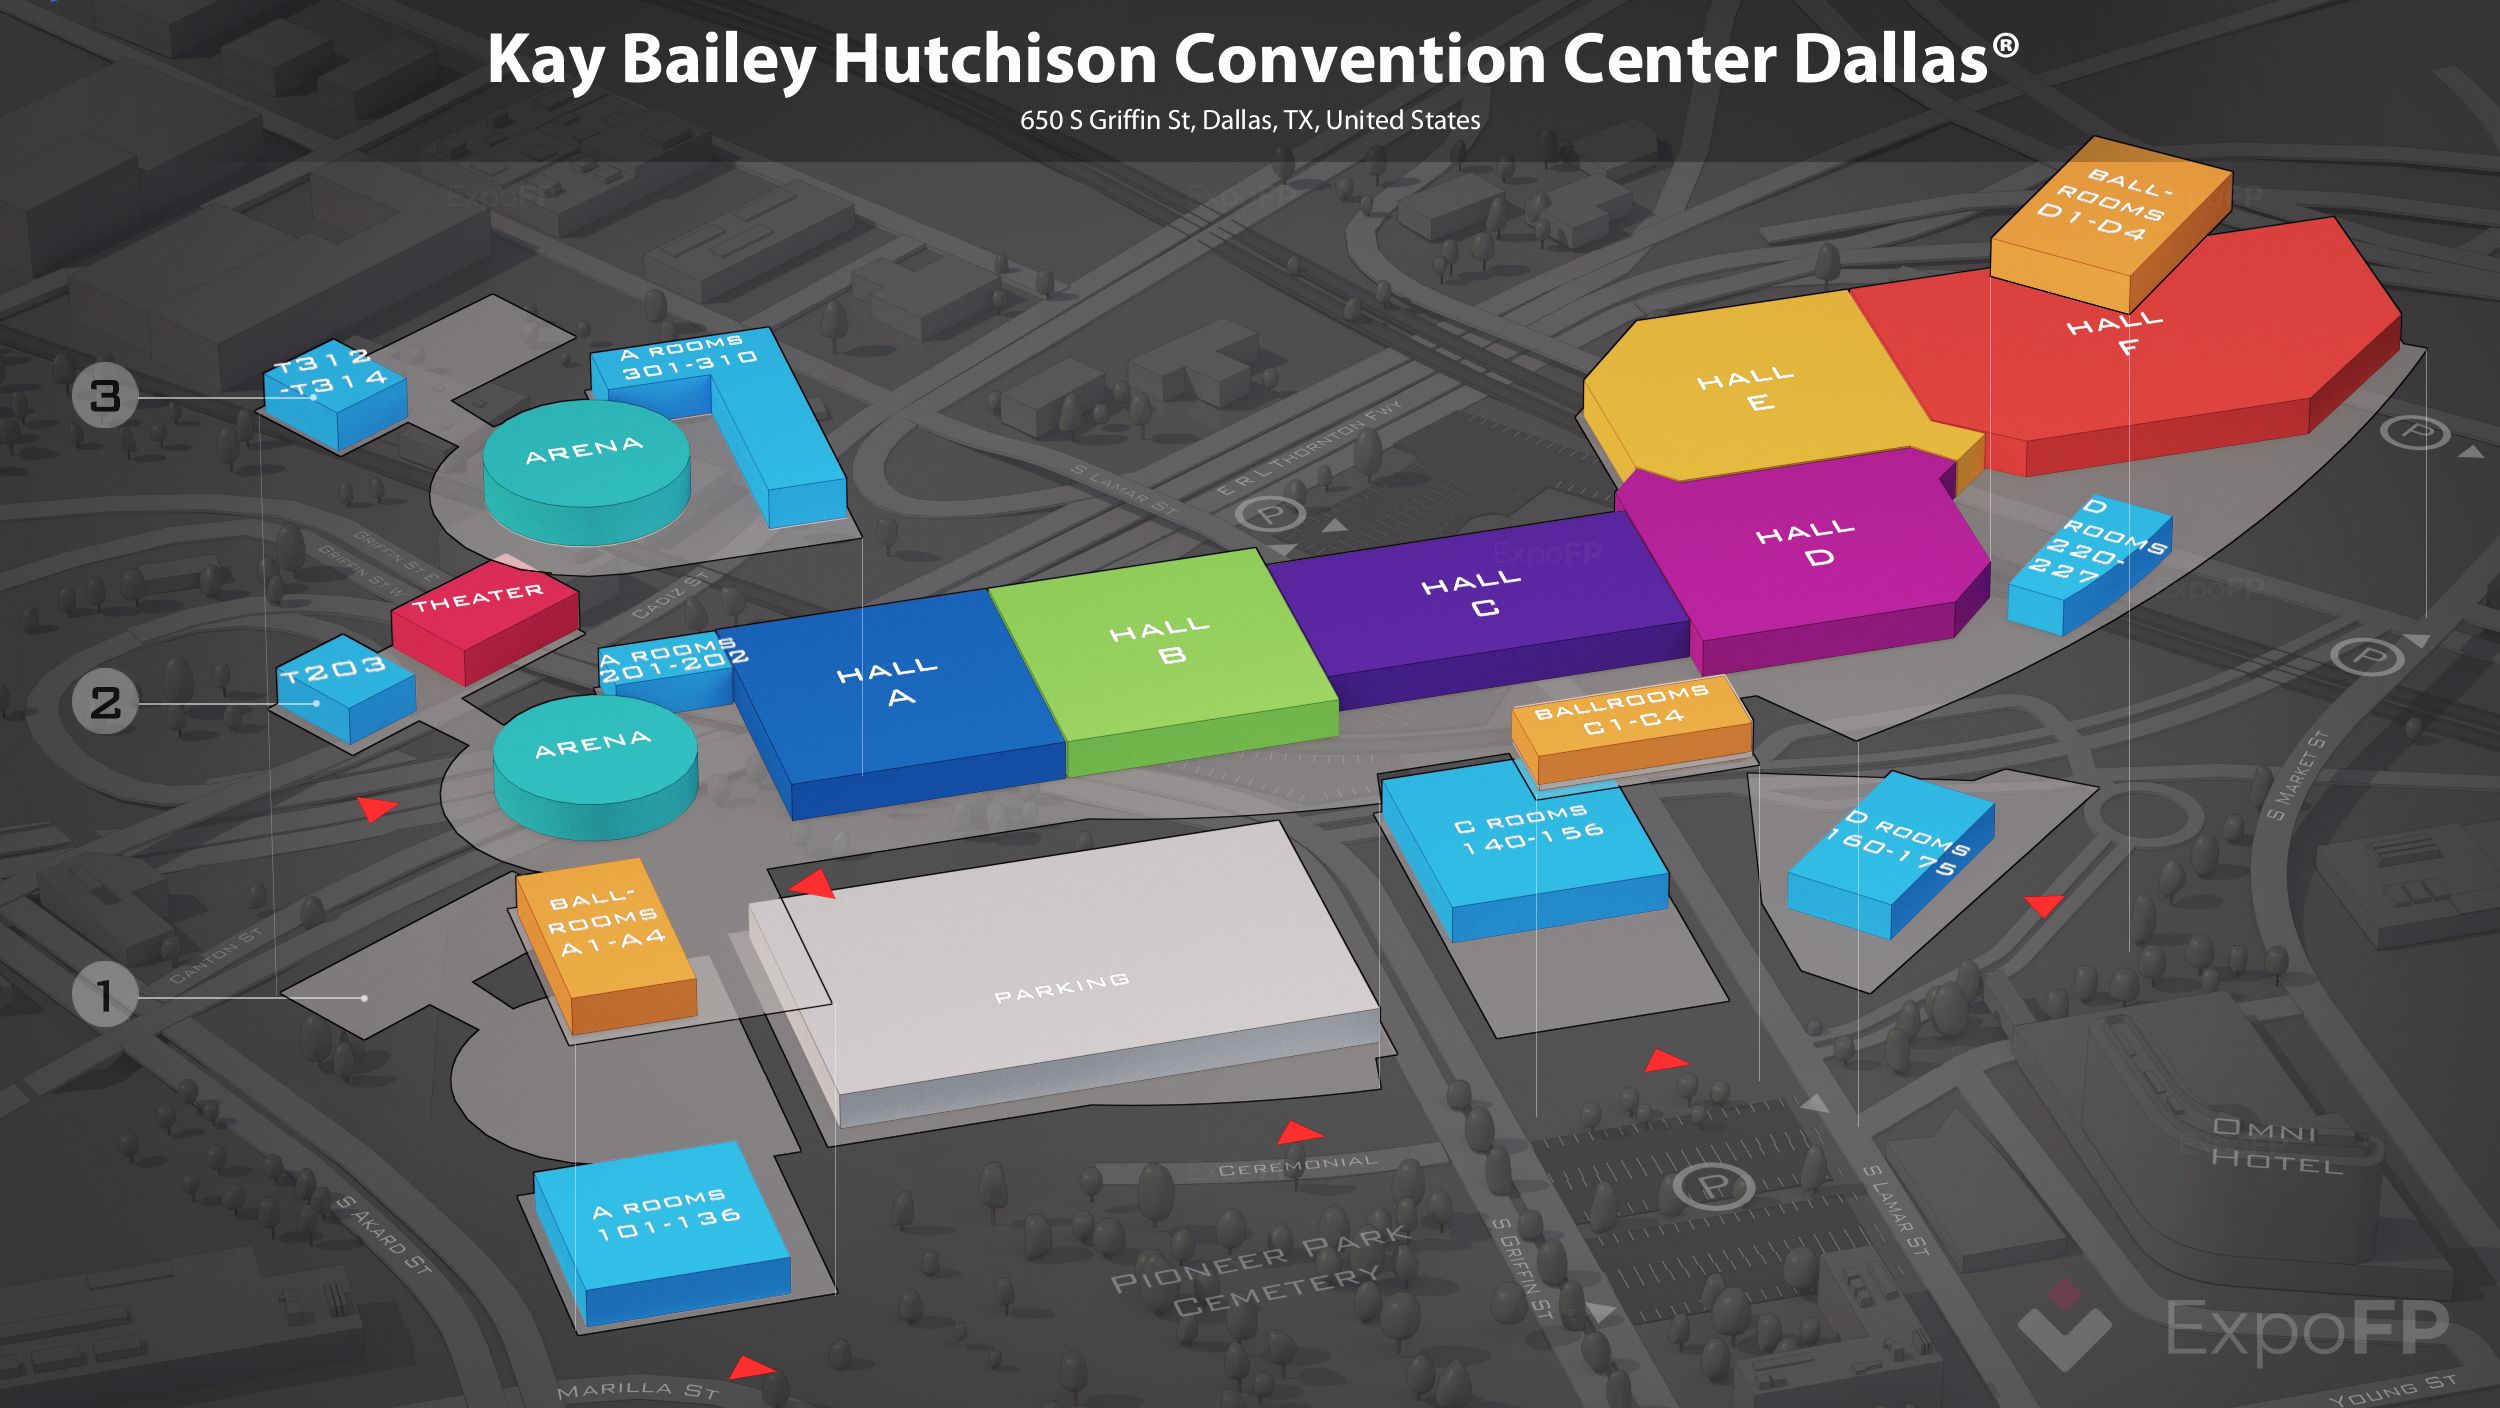 Kay Bailey Hutchison Convention Center Dallas floor plan